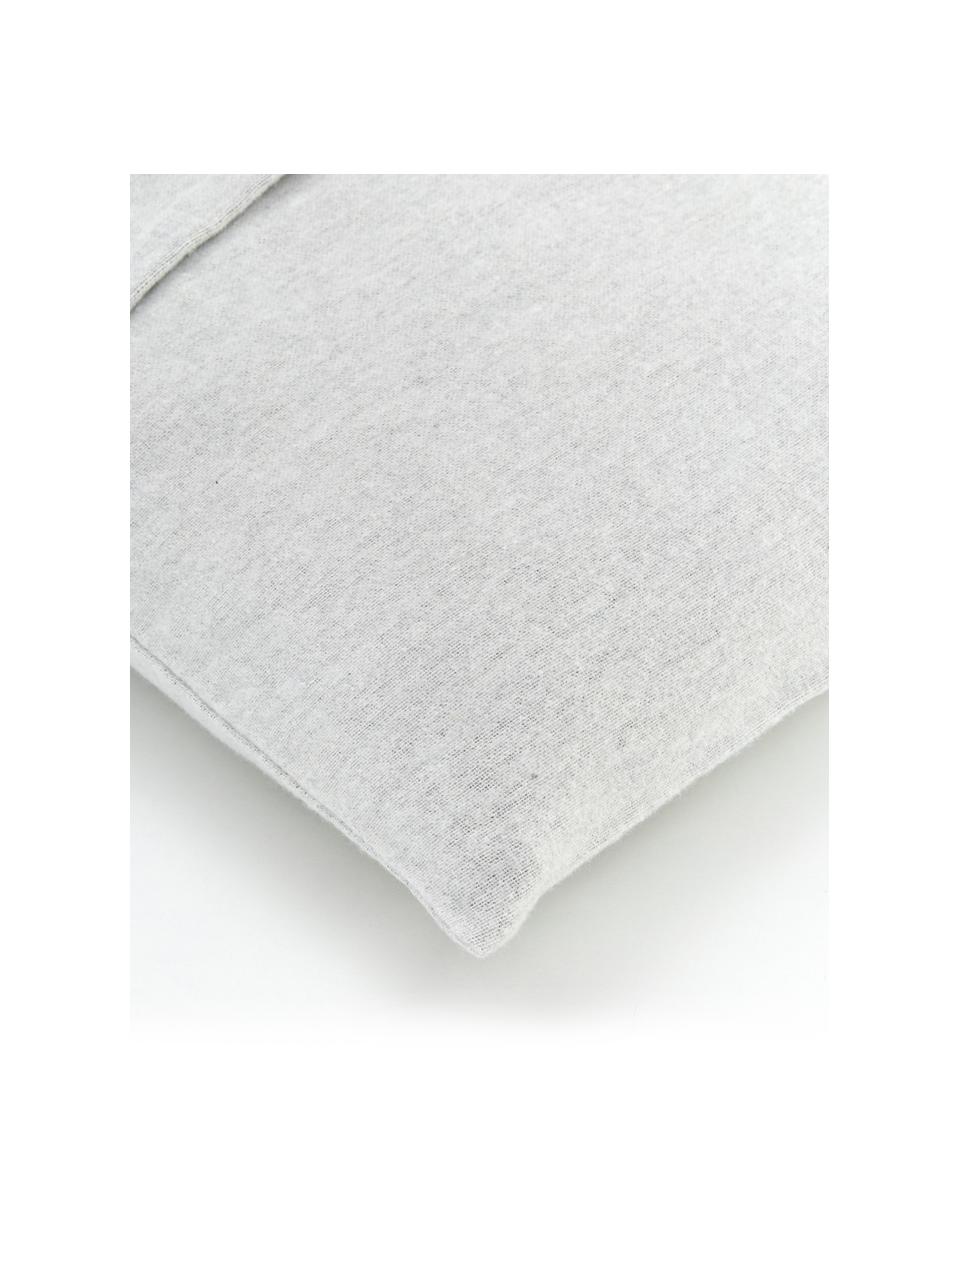 Kissenhülle Silvretta mit Aufschrift, Bezug: 85% Baumwolle, 8% Viskose, Hellgrau, Grau, 40 x 60 cm